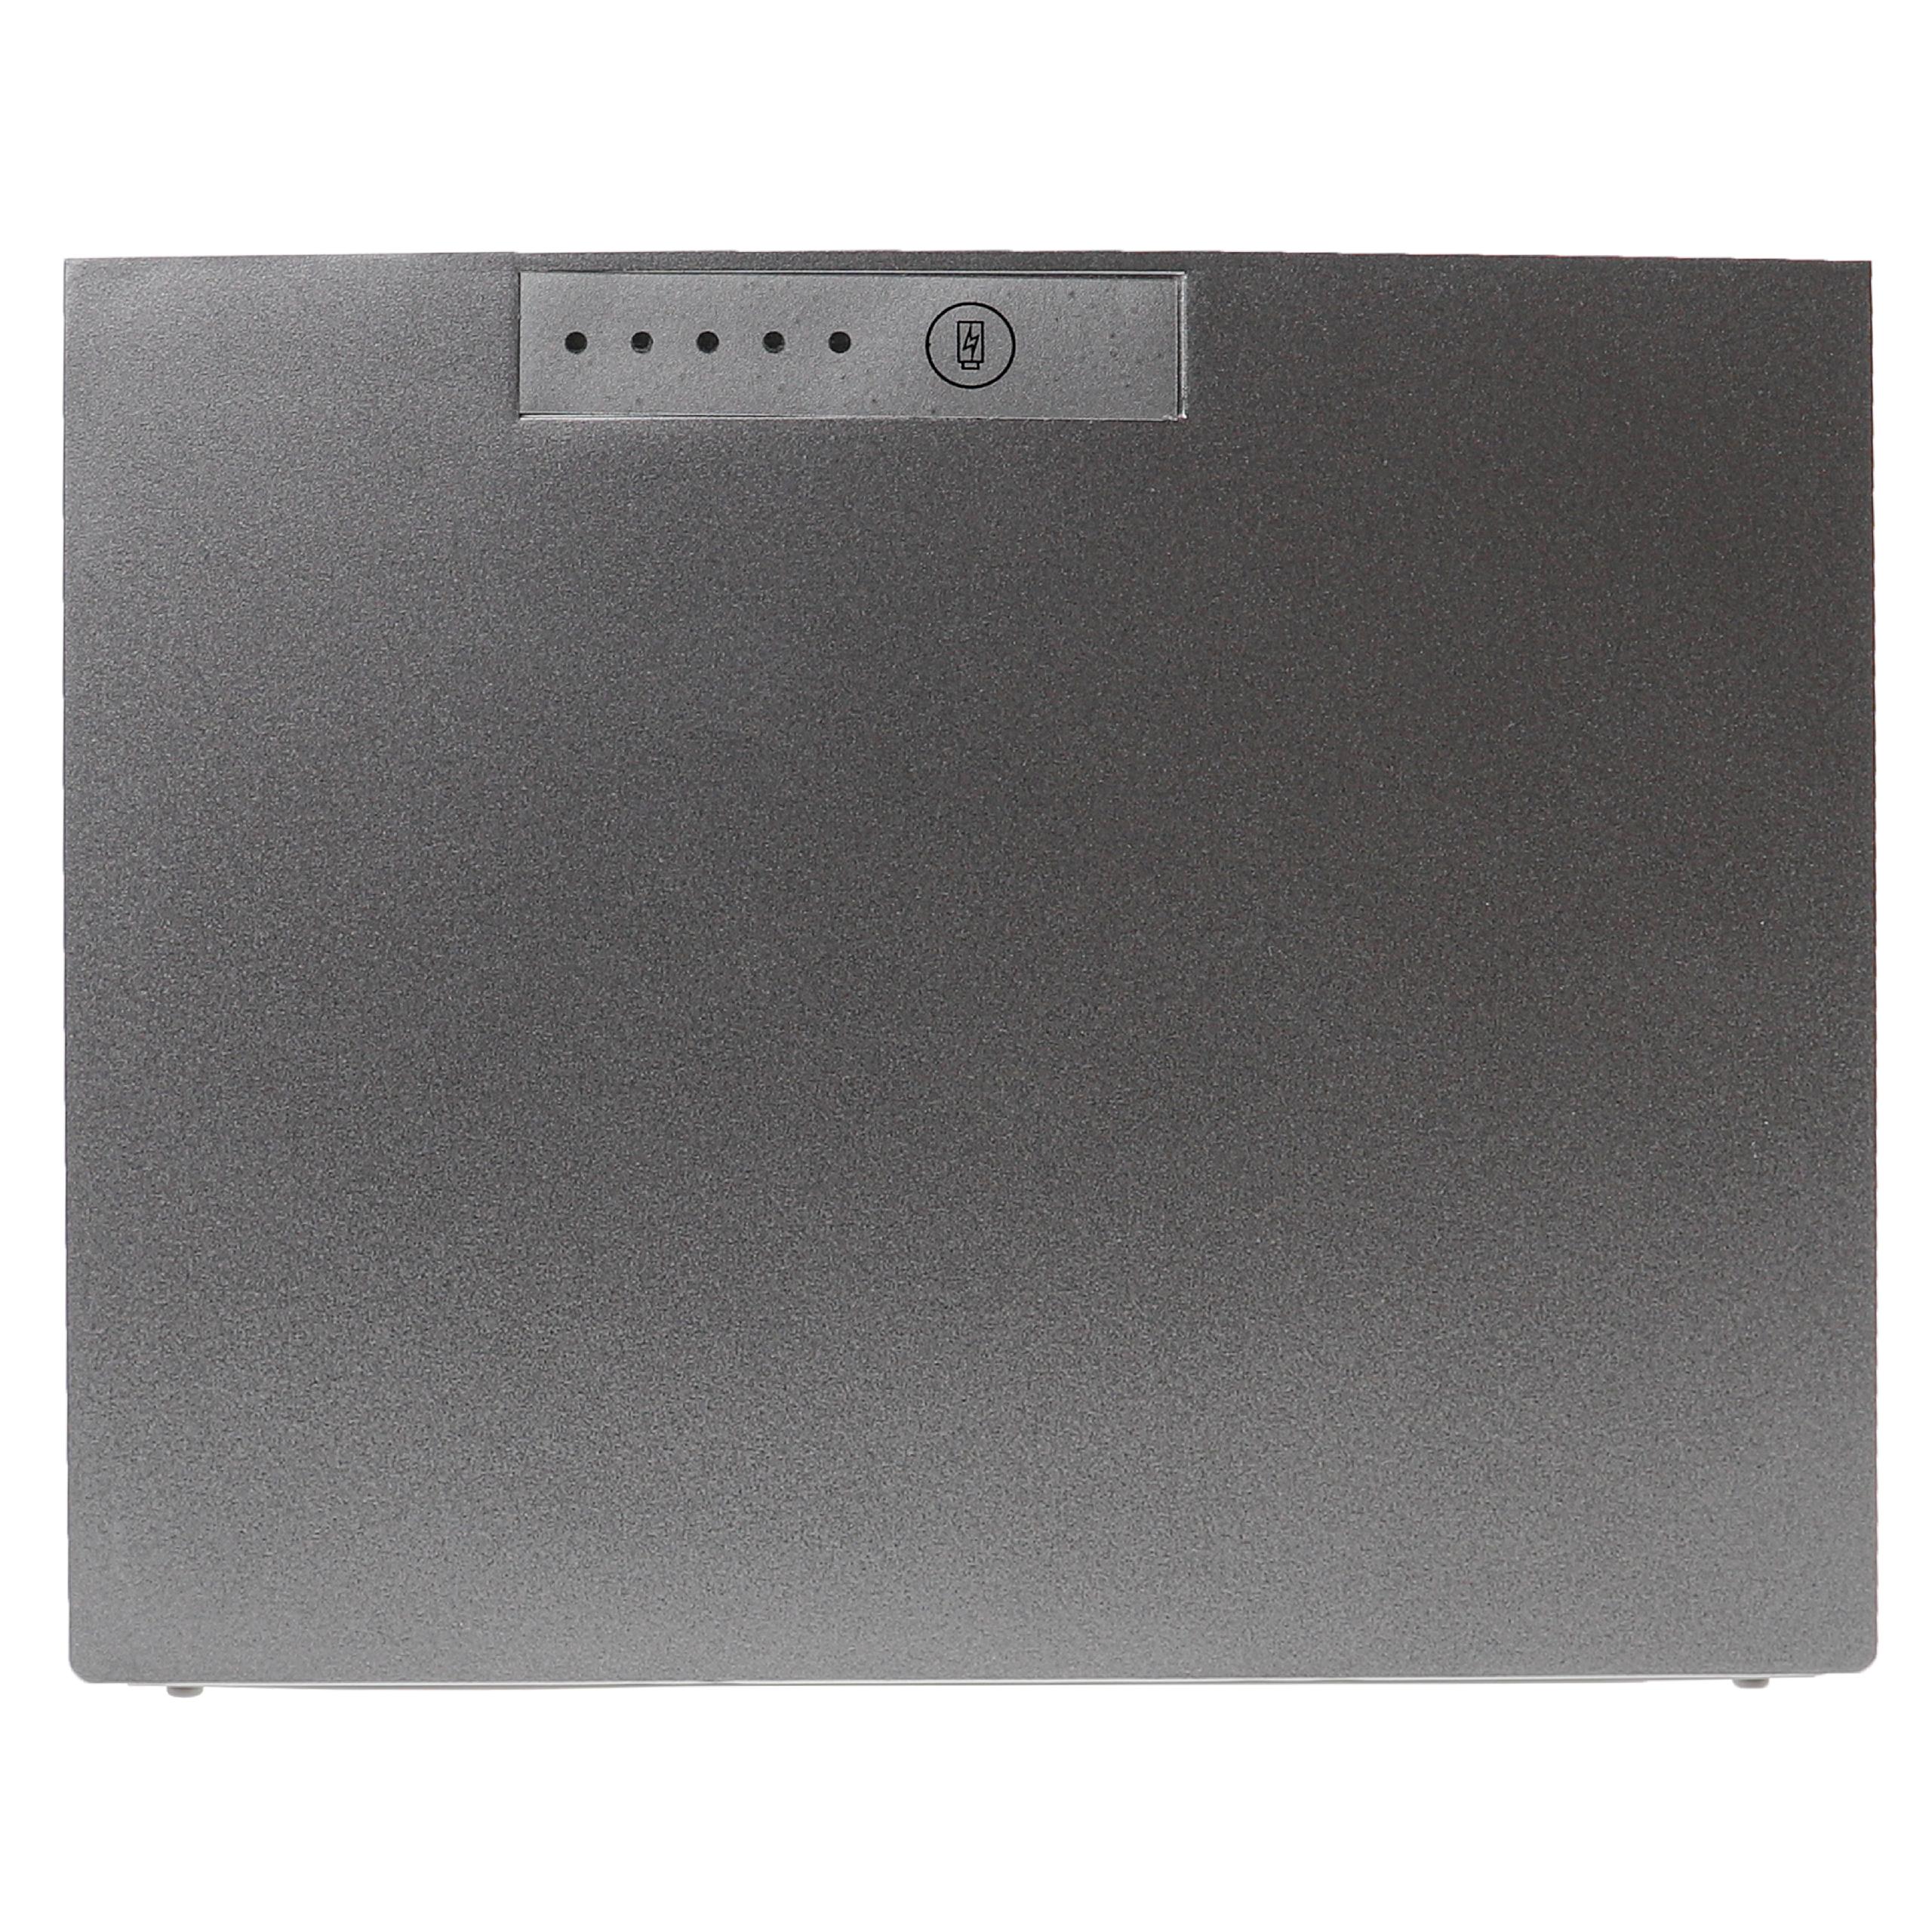 Notebook-Akku als Ersatz für Apple A1175, MA348, MA348/A, MA348G/A, MA348J/A - 5200mAh 10,8V Li-Polymer